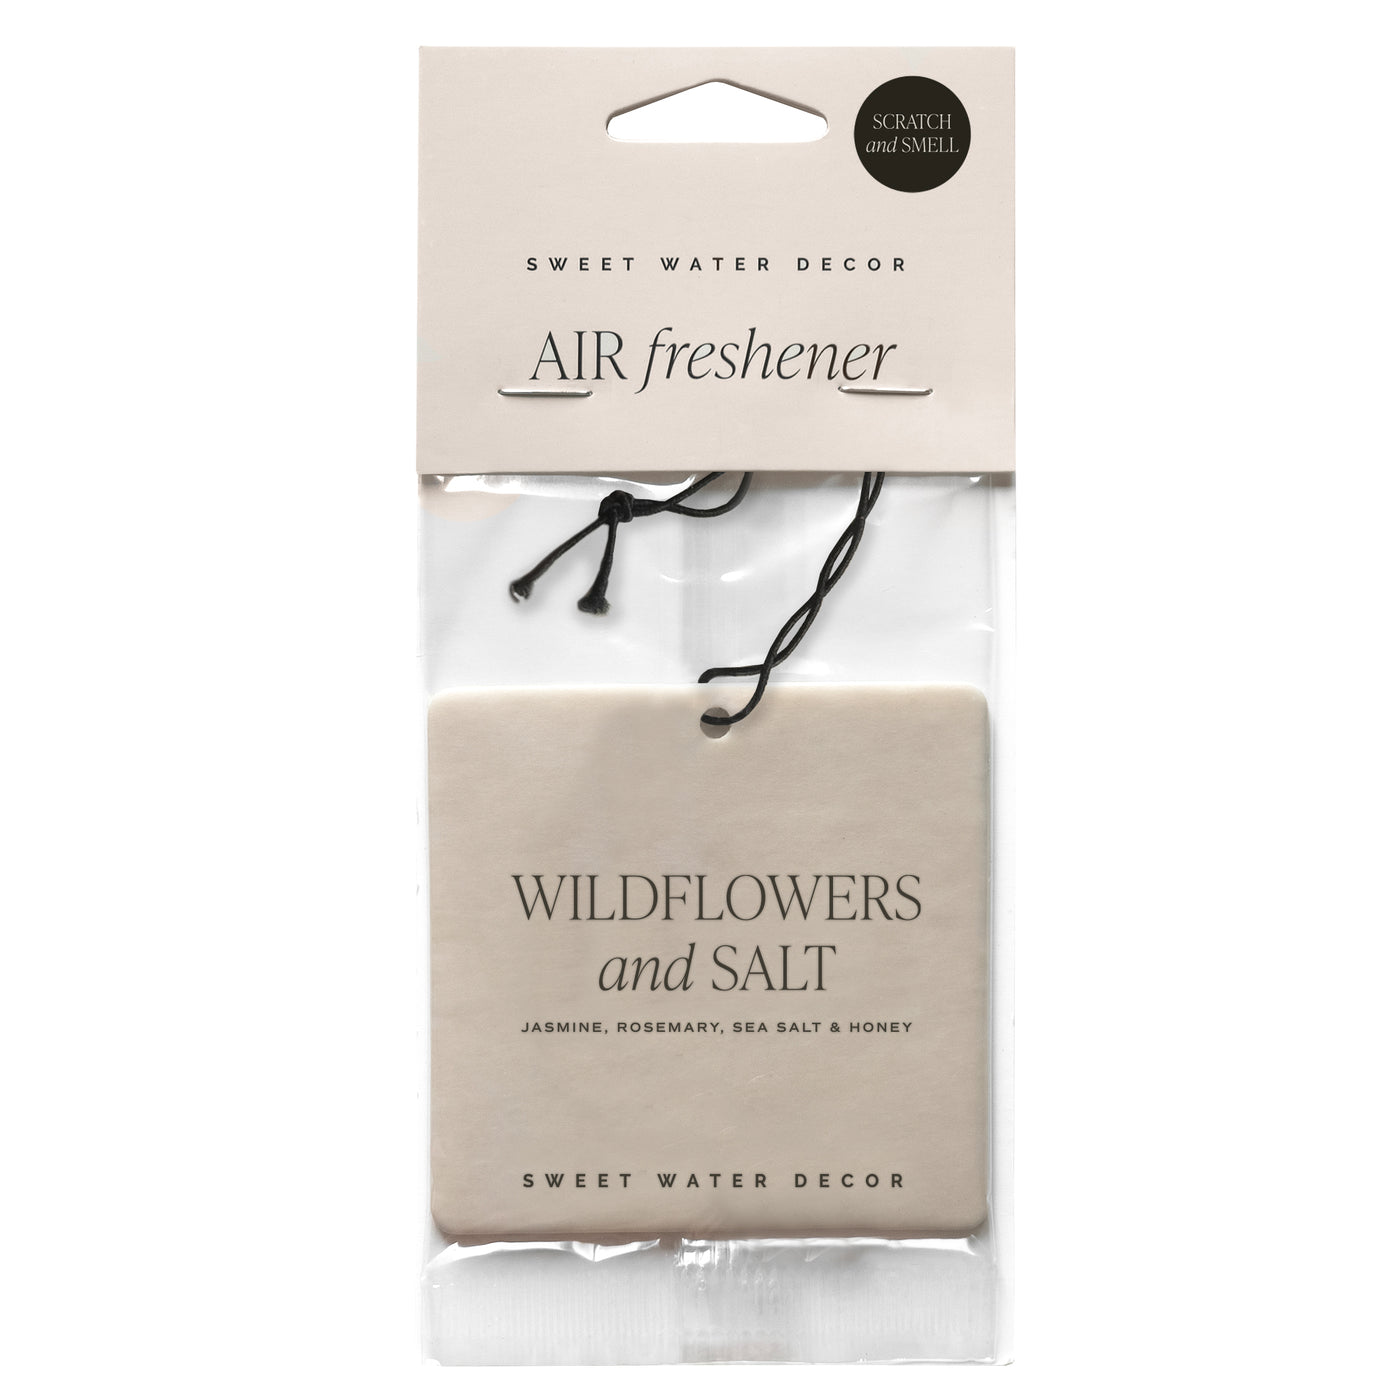 Wildflowers and Salt Hanging Air Freshener - Sweet Water Decor - Air Freshener